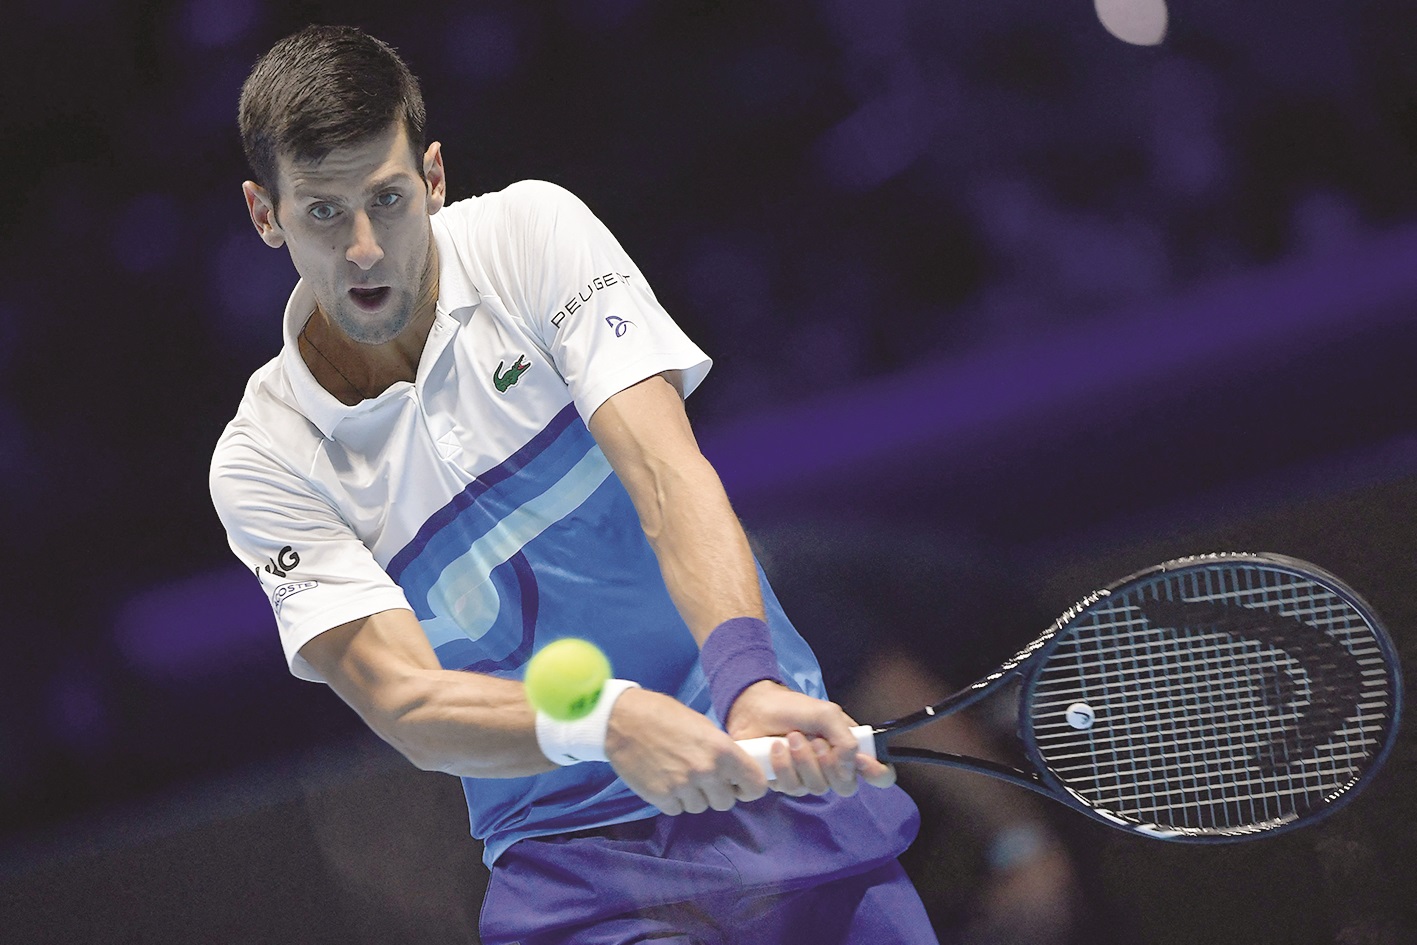 Djokovic won’t want to risk missing Aussie Open